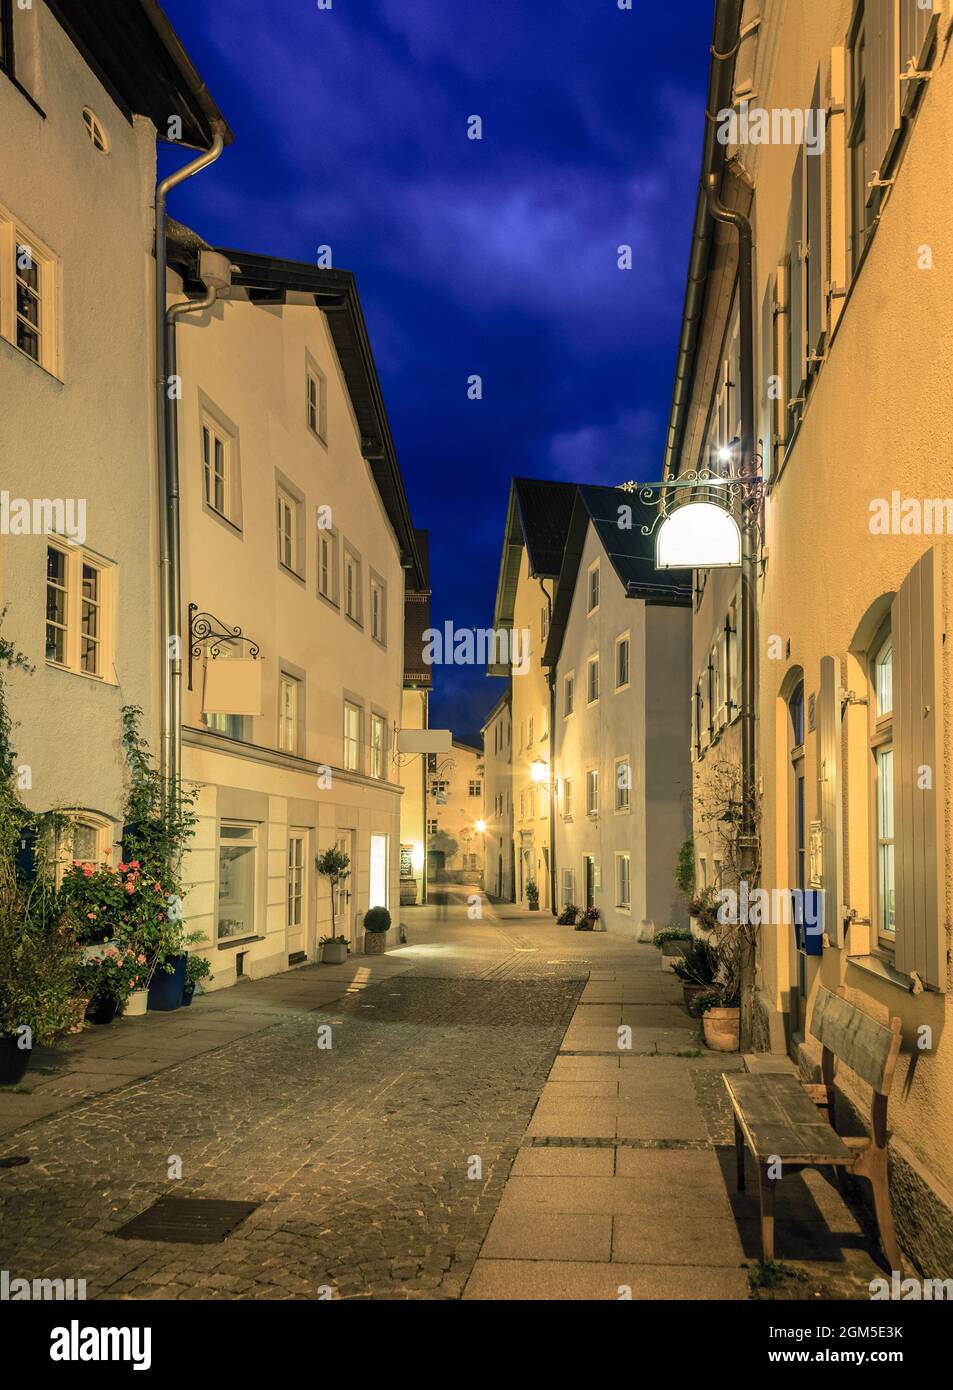 Narrow street in Fussen, Germany at night Stock Photo